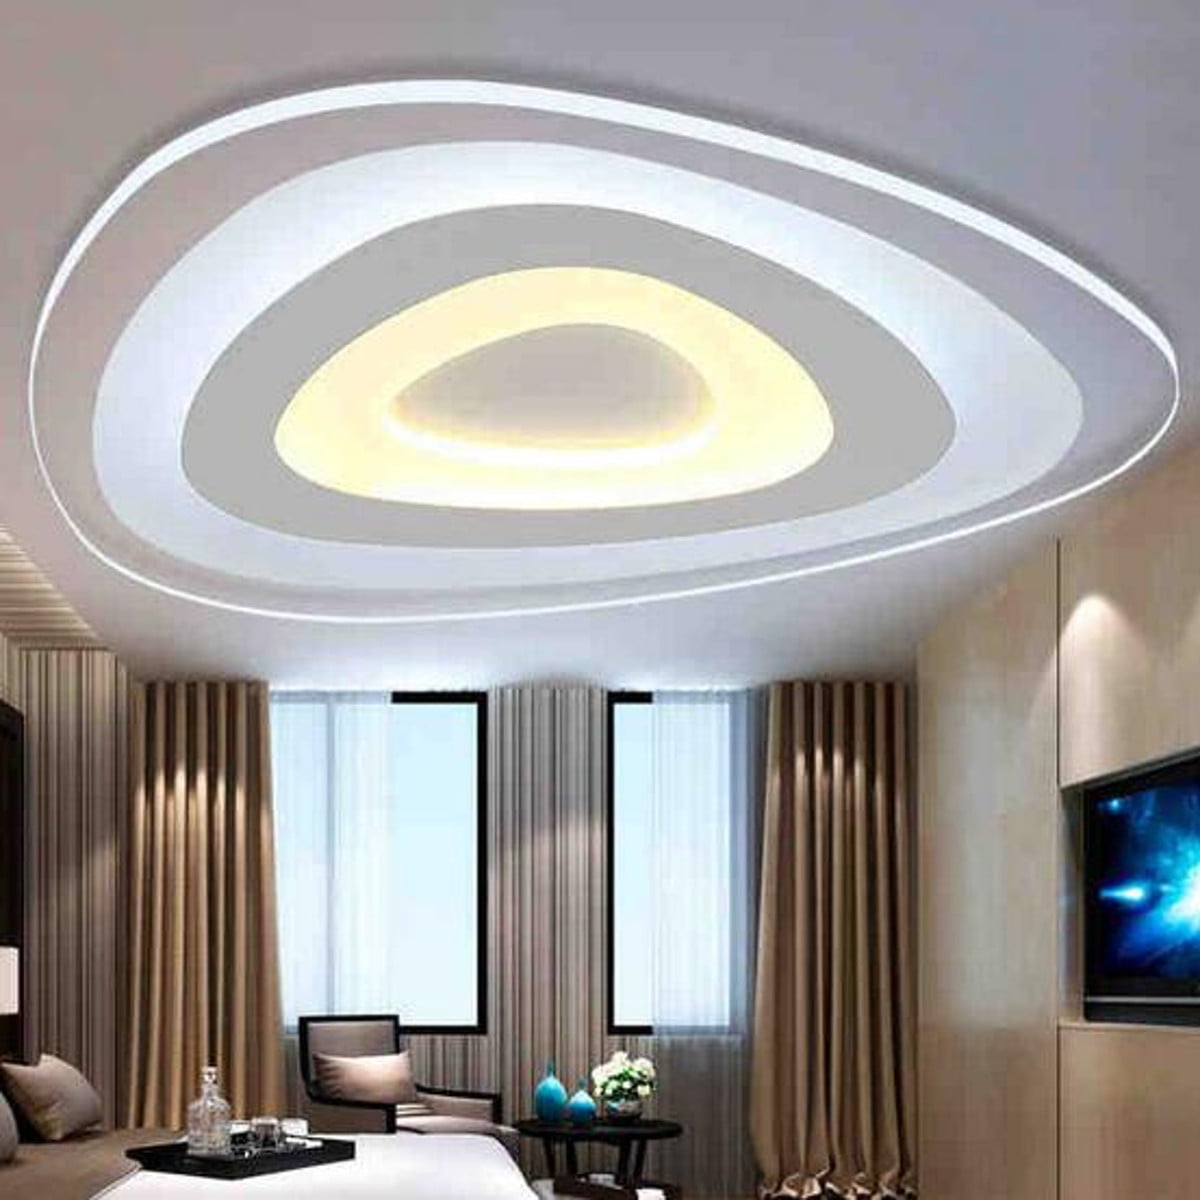 Bedroom Ceiling Light Fixtures With Fan - Popular Bedroom Ceiling Fan ...